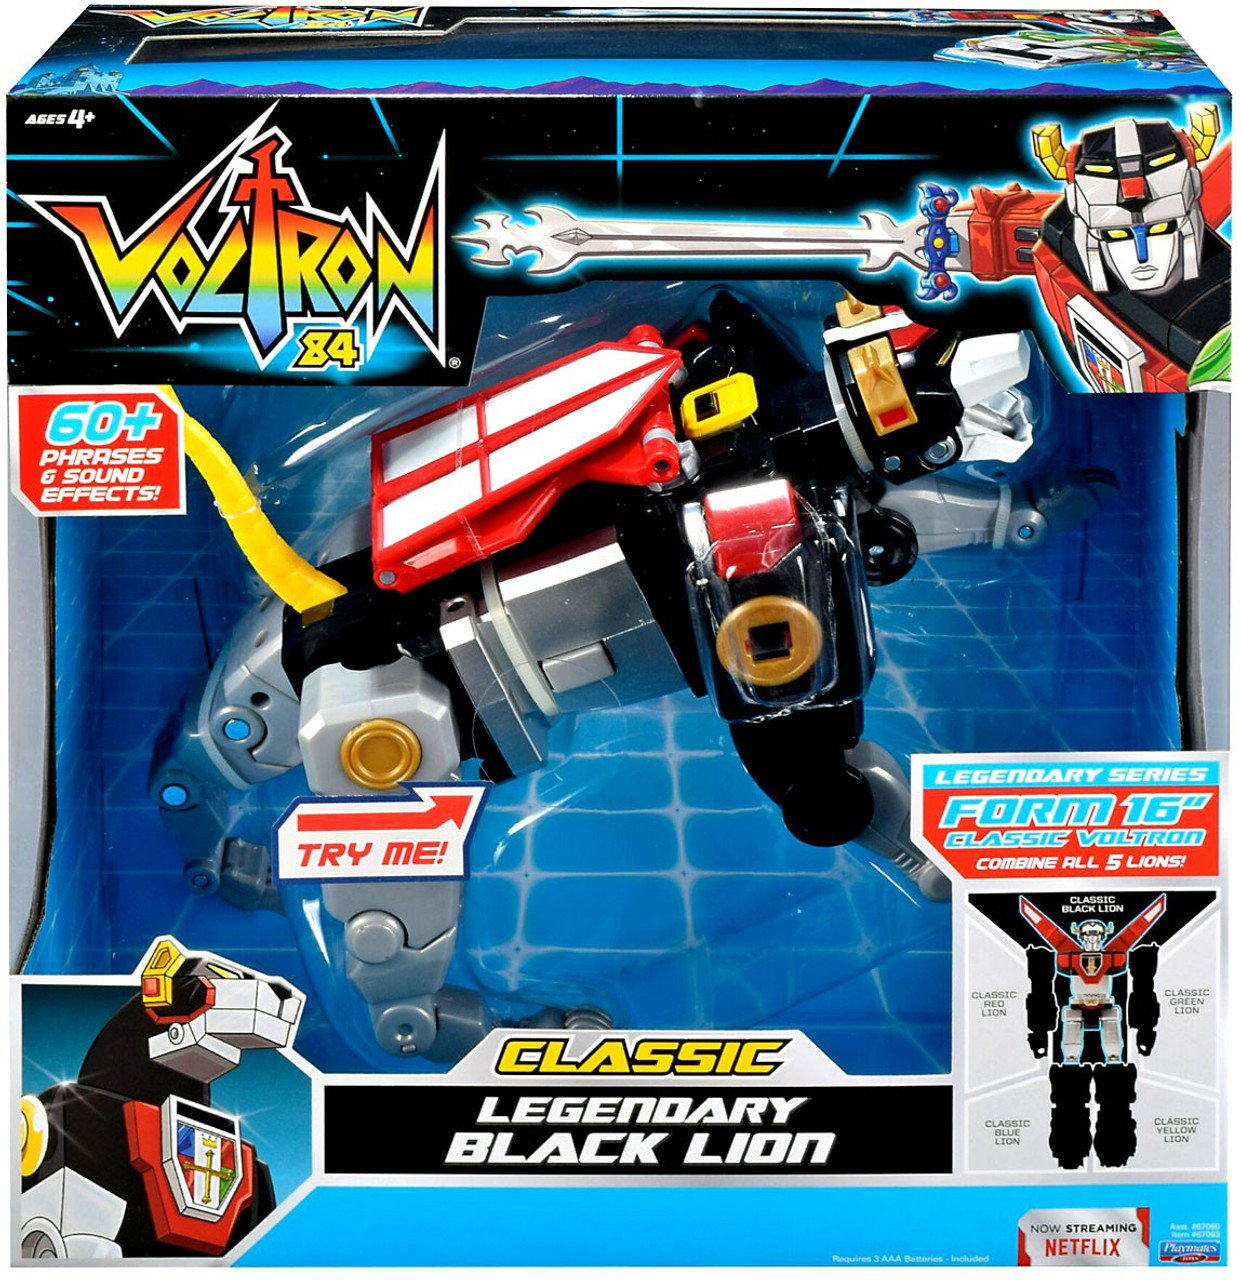 Voltron 84 Classic Legendary Black Lion Deluxe Combinable Action Figure Playmates Toywiz - roblox voltron red lion